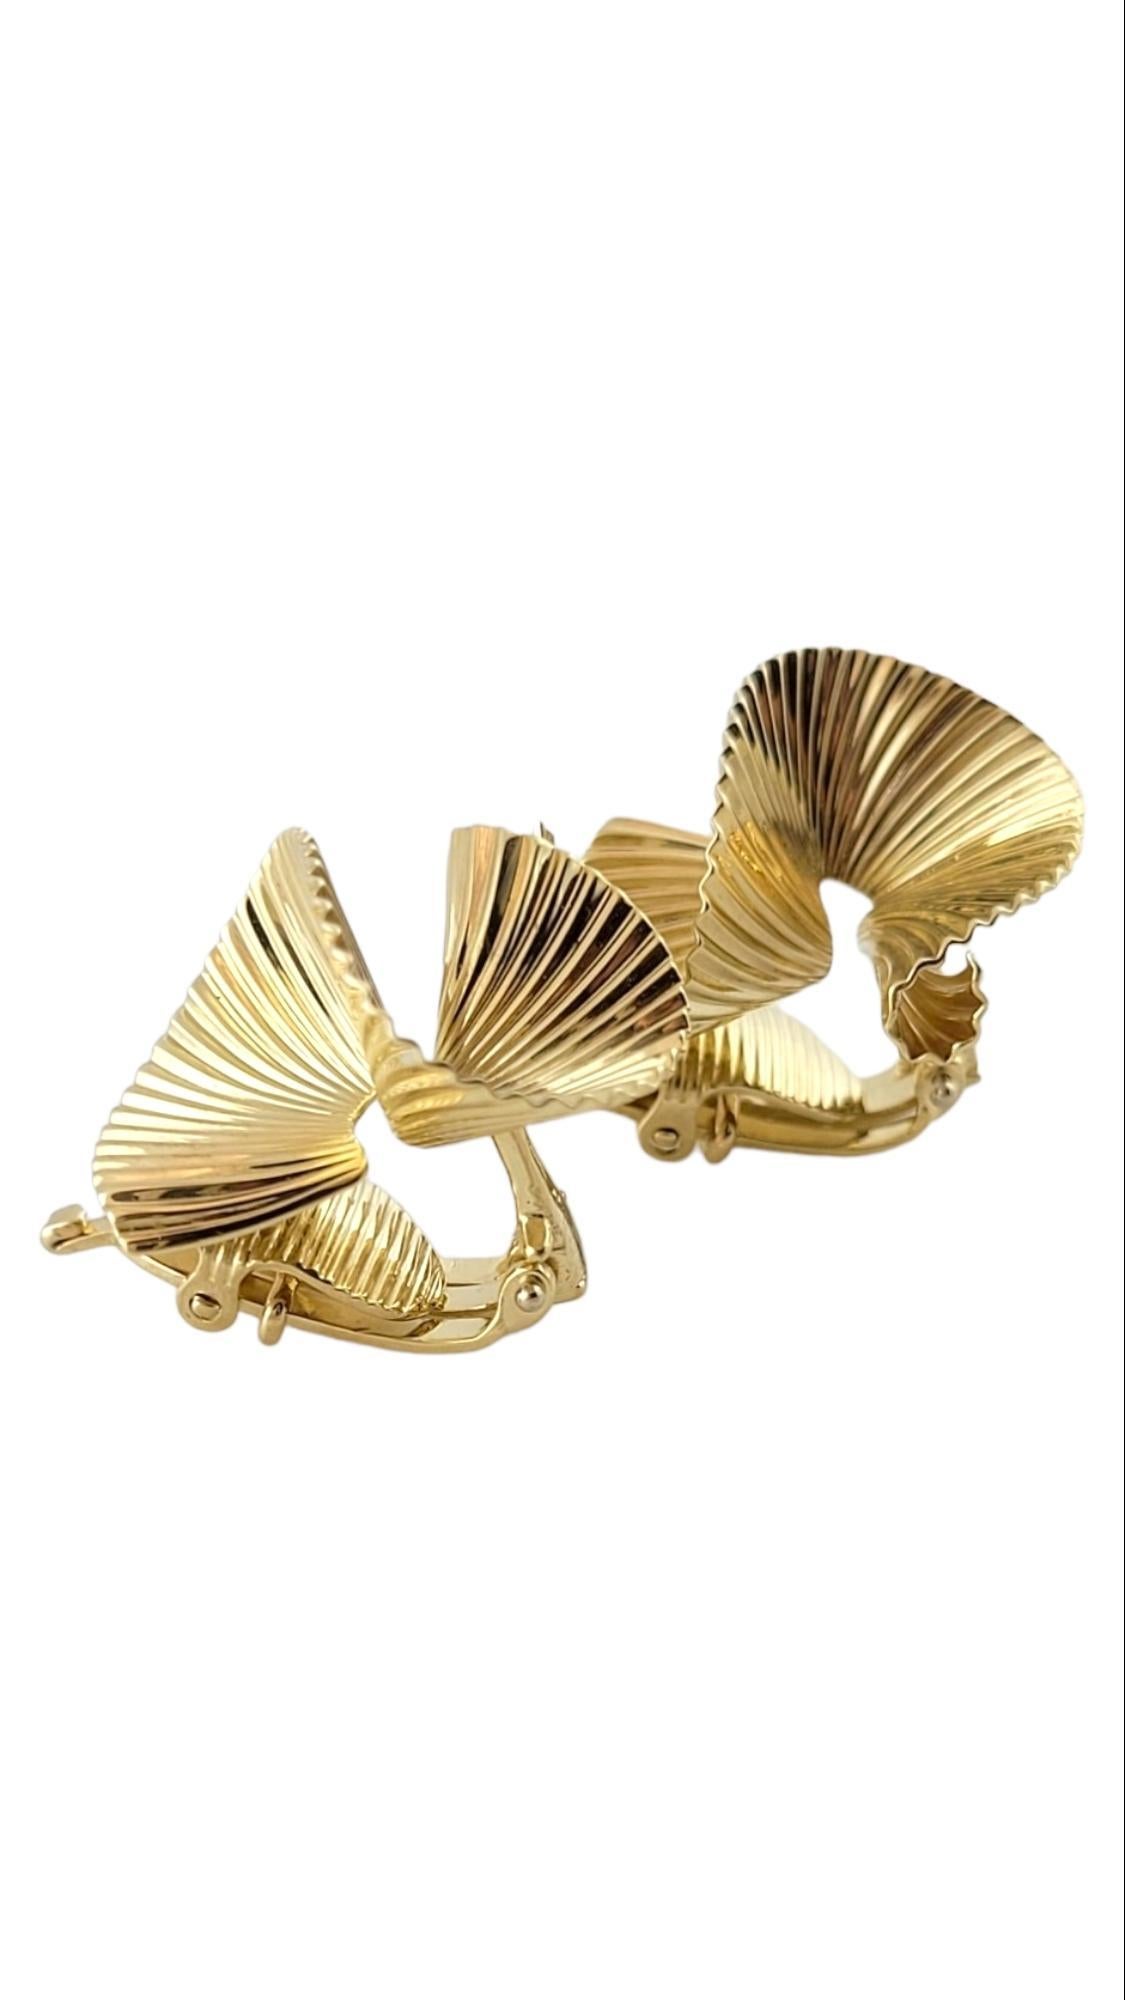 Tiffany & Co McTeigue 14K Yellow Gold Swirl Ribbon Fan Clip On Earrings

This gorgeous set of clip-on earrings by designer Tiffany & Co. were crafted into a beautiful swirl ribbon fan shape from 14K yellow gold!

Size: 25.4mm X 19.4mm X